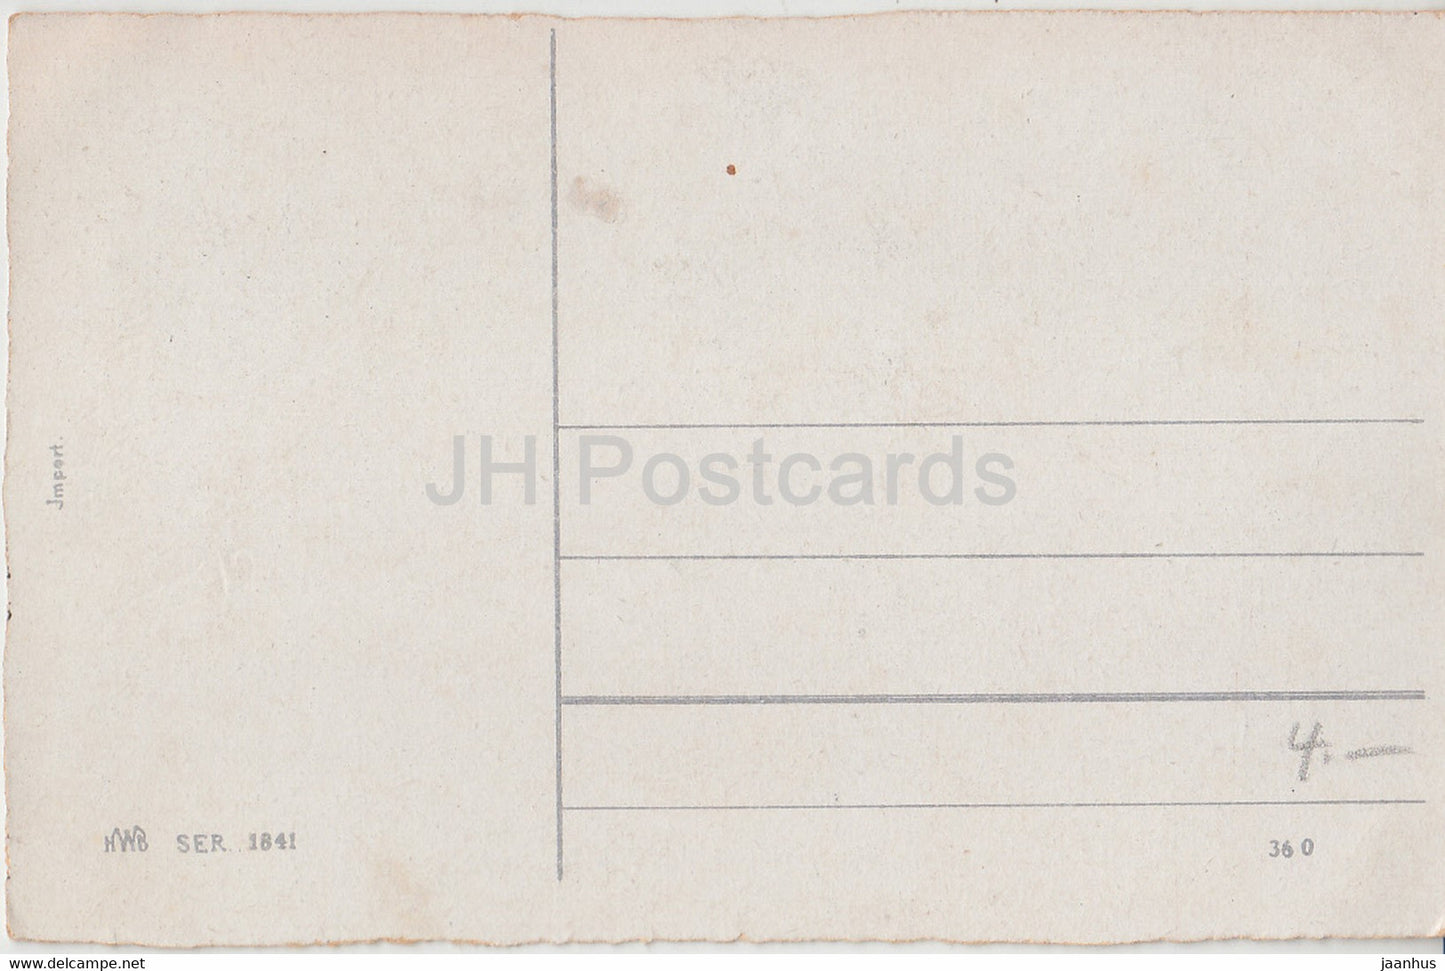 Pentecost Greeting Card - Herzliche Pfingstgrusse - birch - boat - HWB SER 1841 - old postcard - Germany - unused